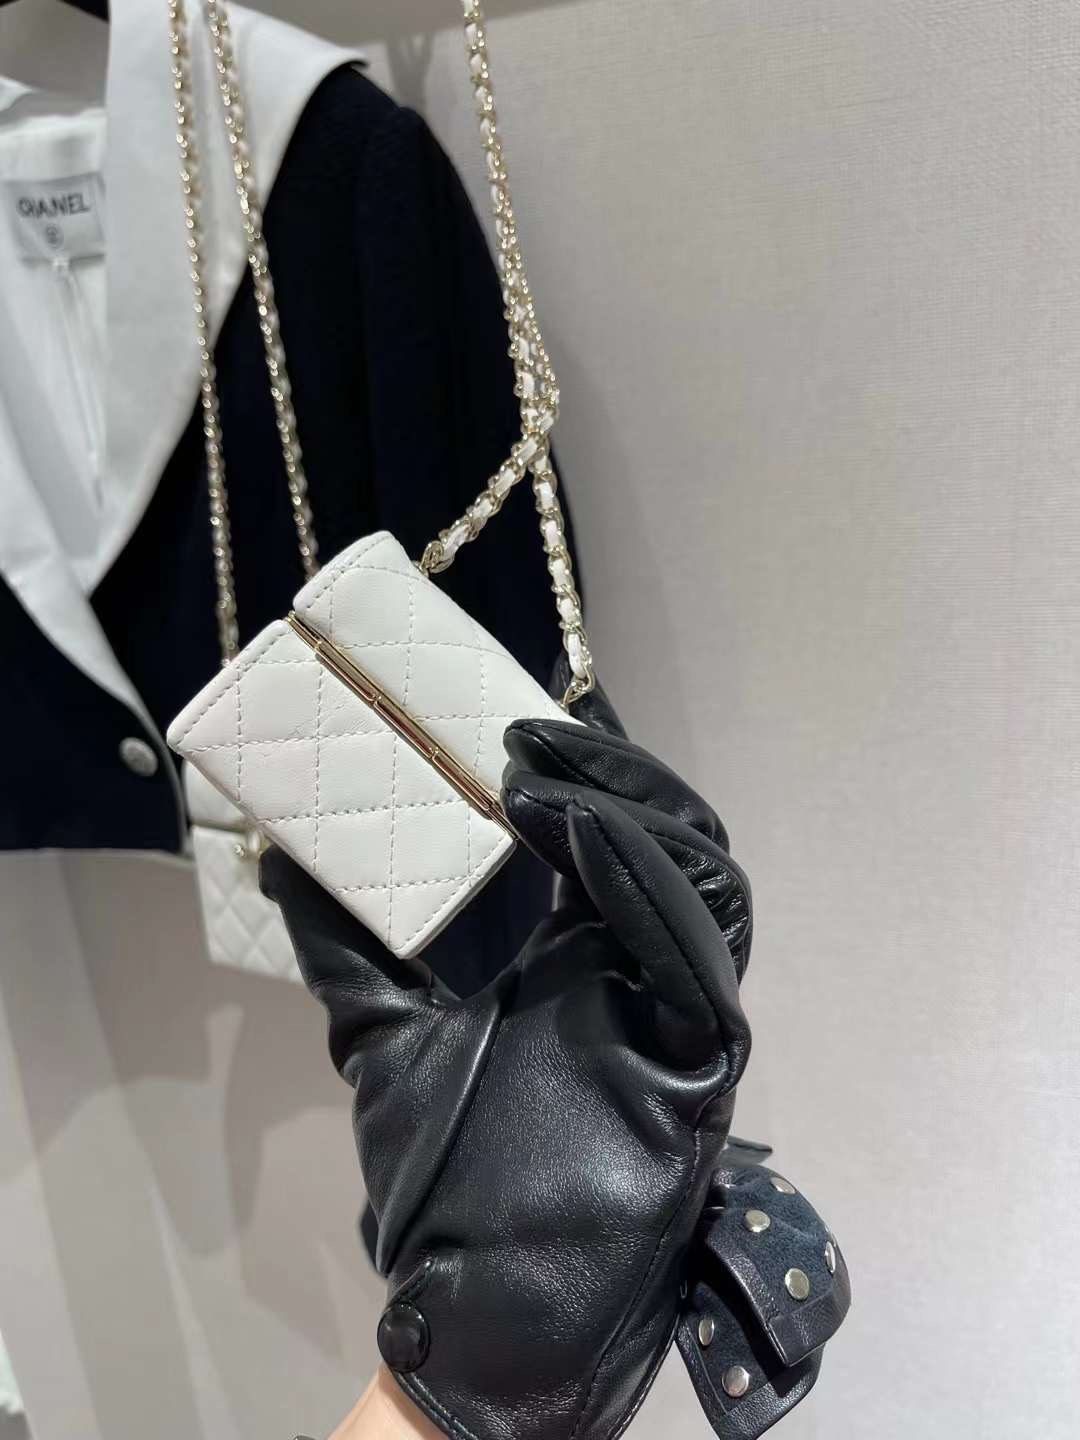 【P1170】Chanel新款包包 香奈儿进口羊皮春夏系列迷你盒子化妆包 白色